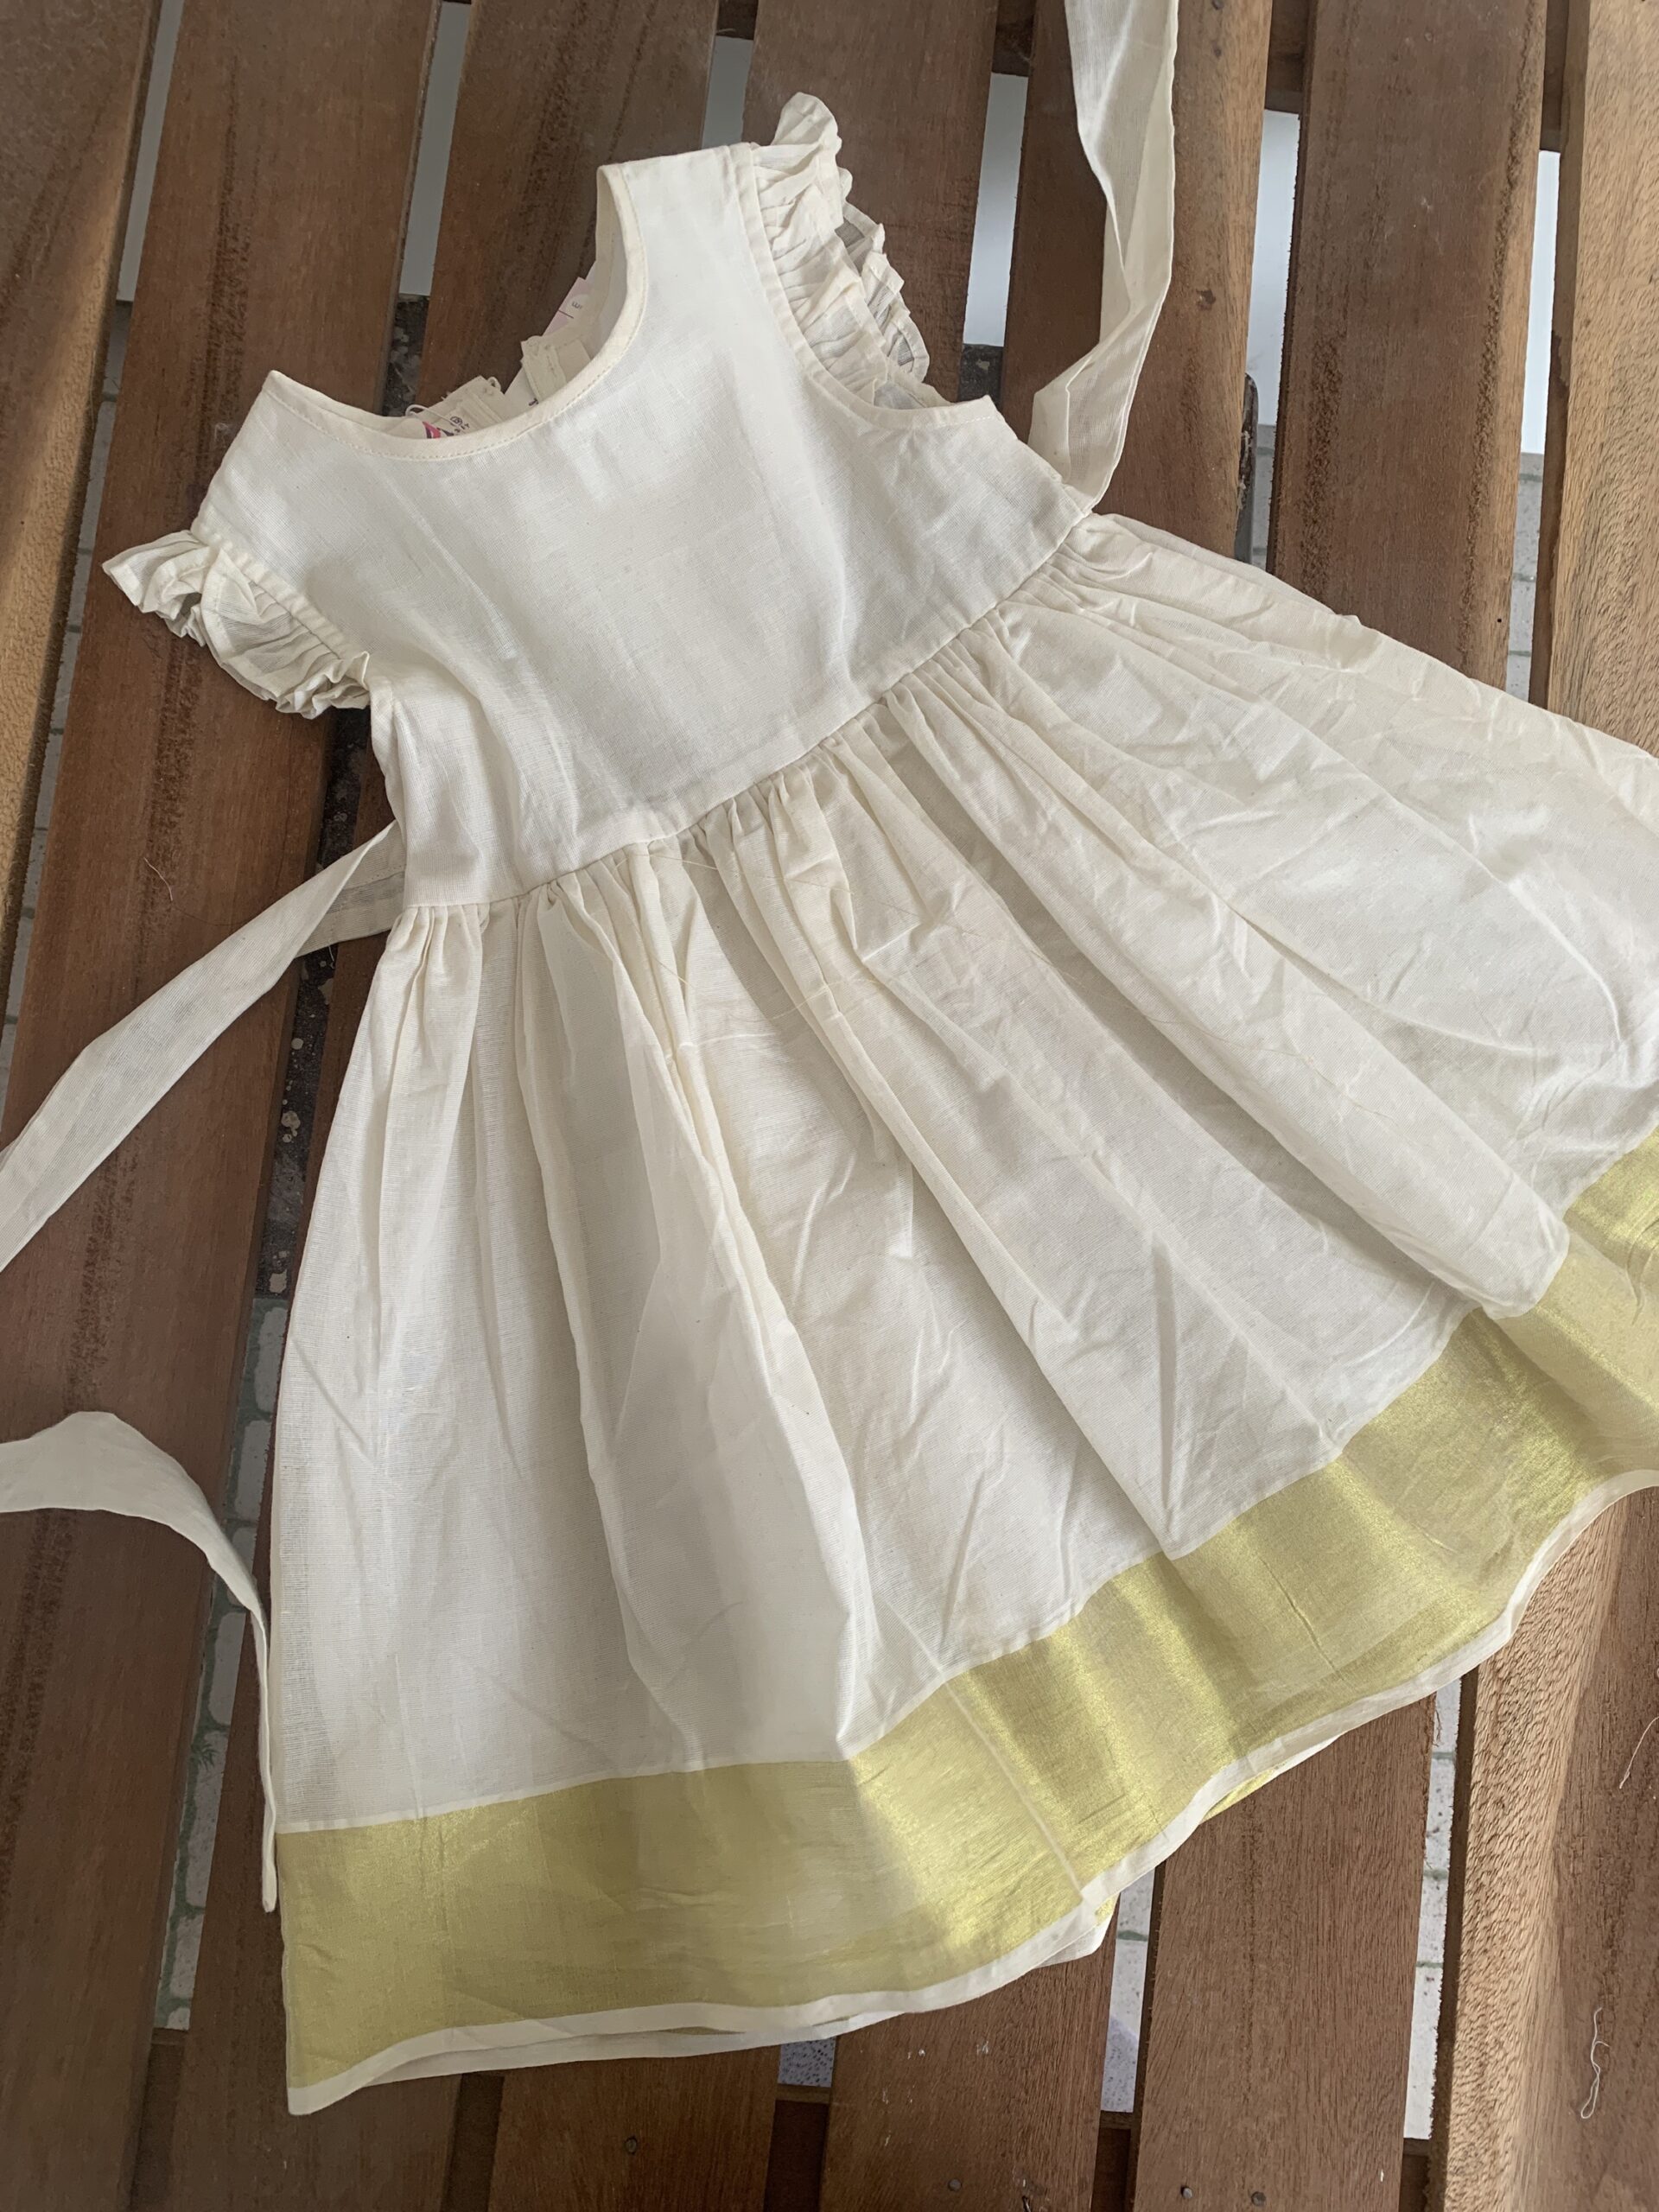 Buy Picksparrow Baby Girl Banarasi Silk Yoke  Kerala Kasavu Cotton Frock DressEthnicwearFront Open 06 Months Peach at Amazonin